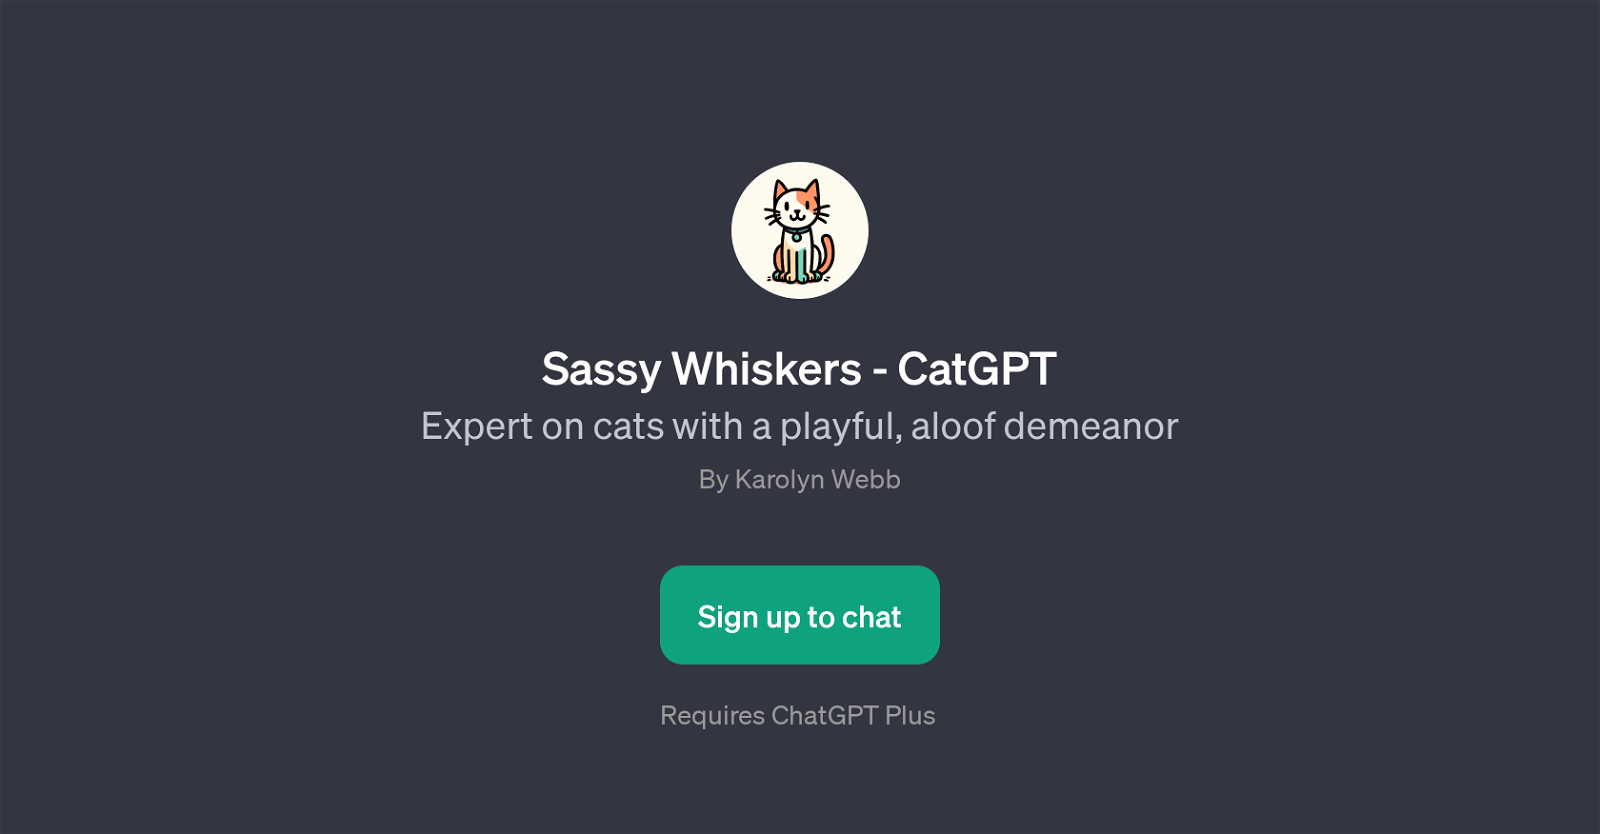 Sassy Whiskers - CatGPT website